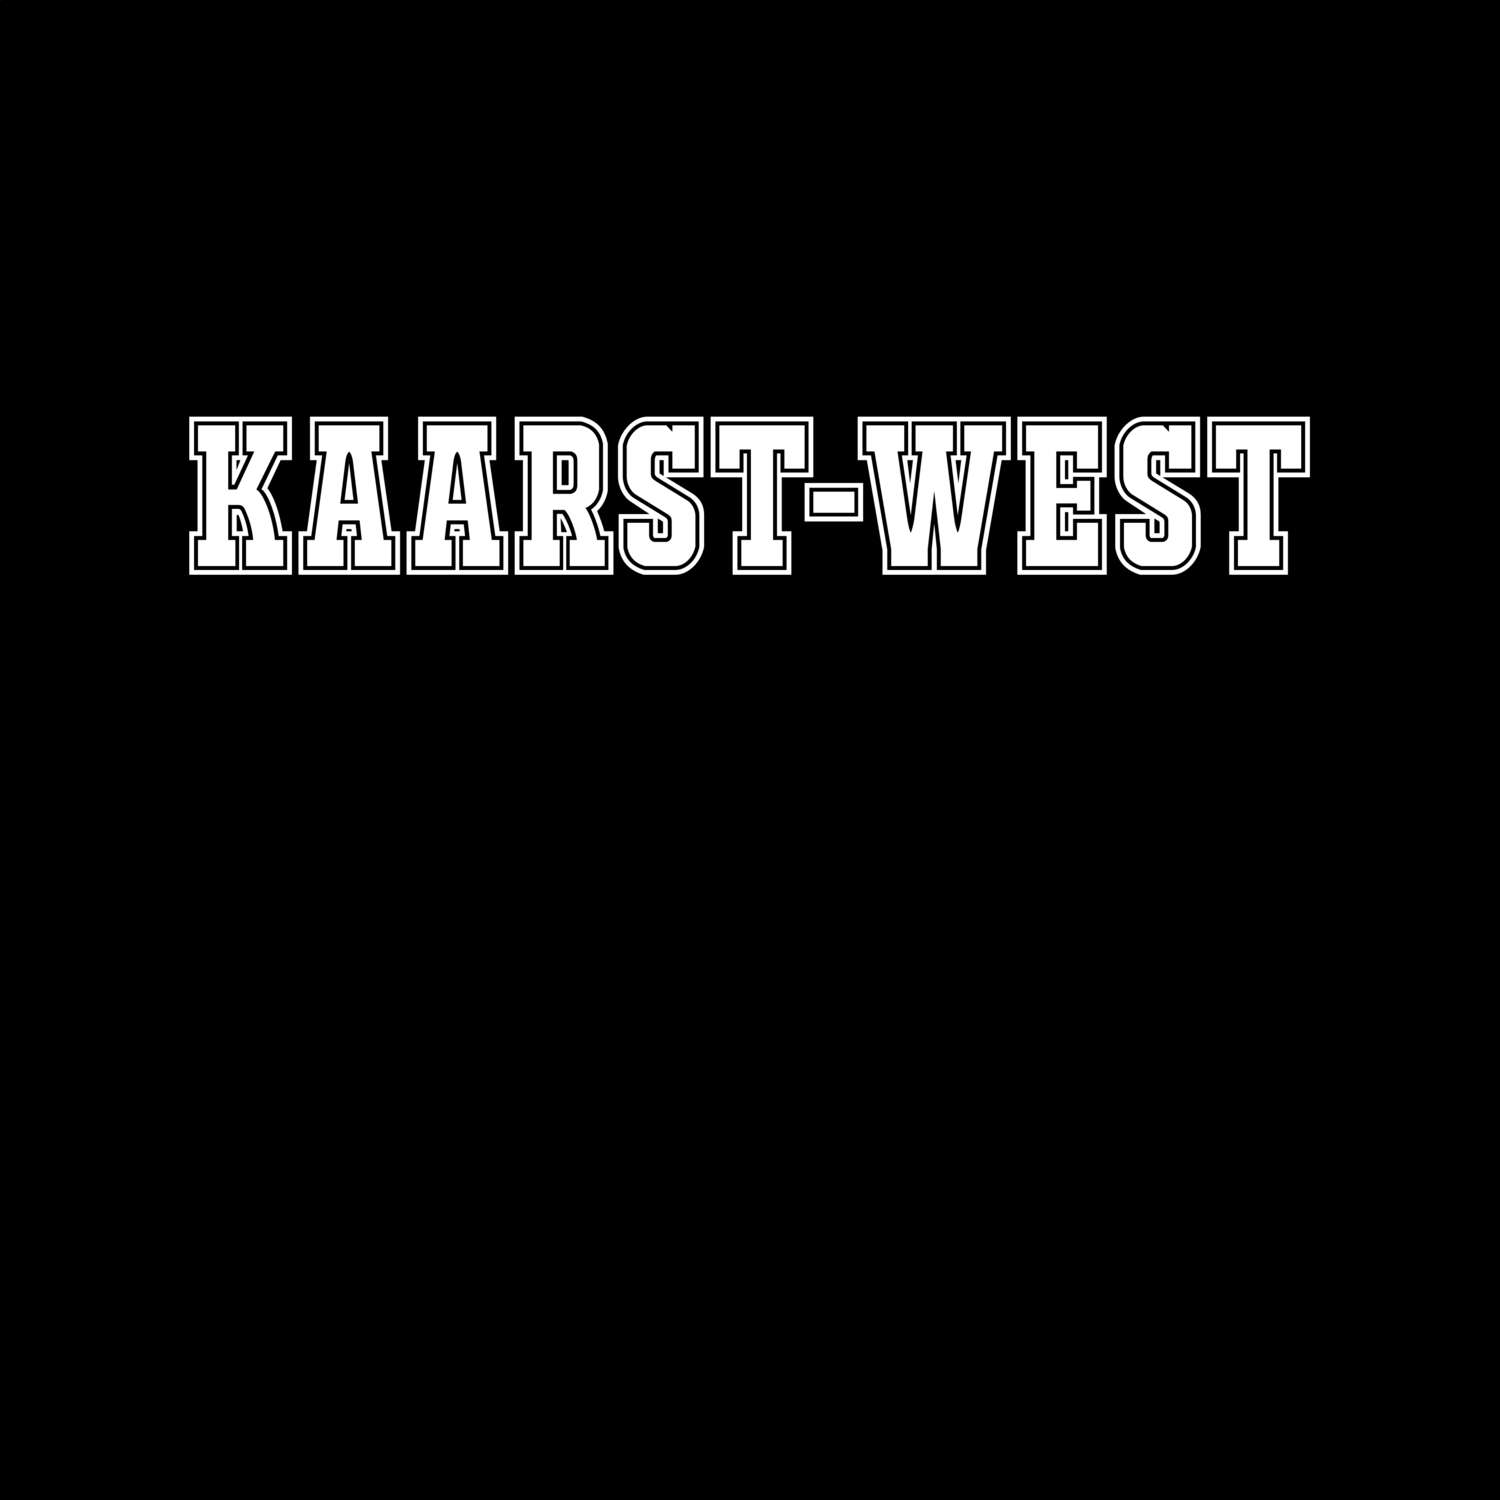 Kaarst-West T-Shirt »Classic«